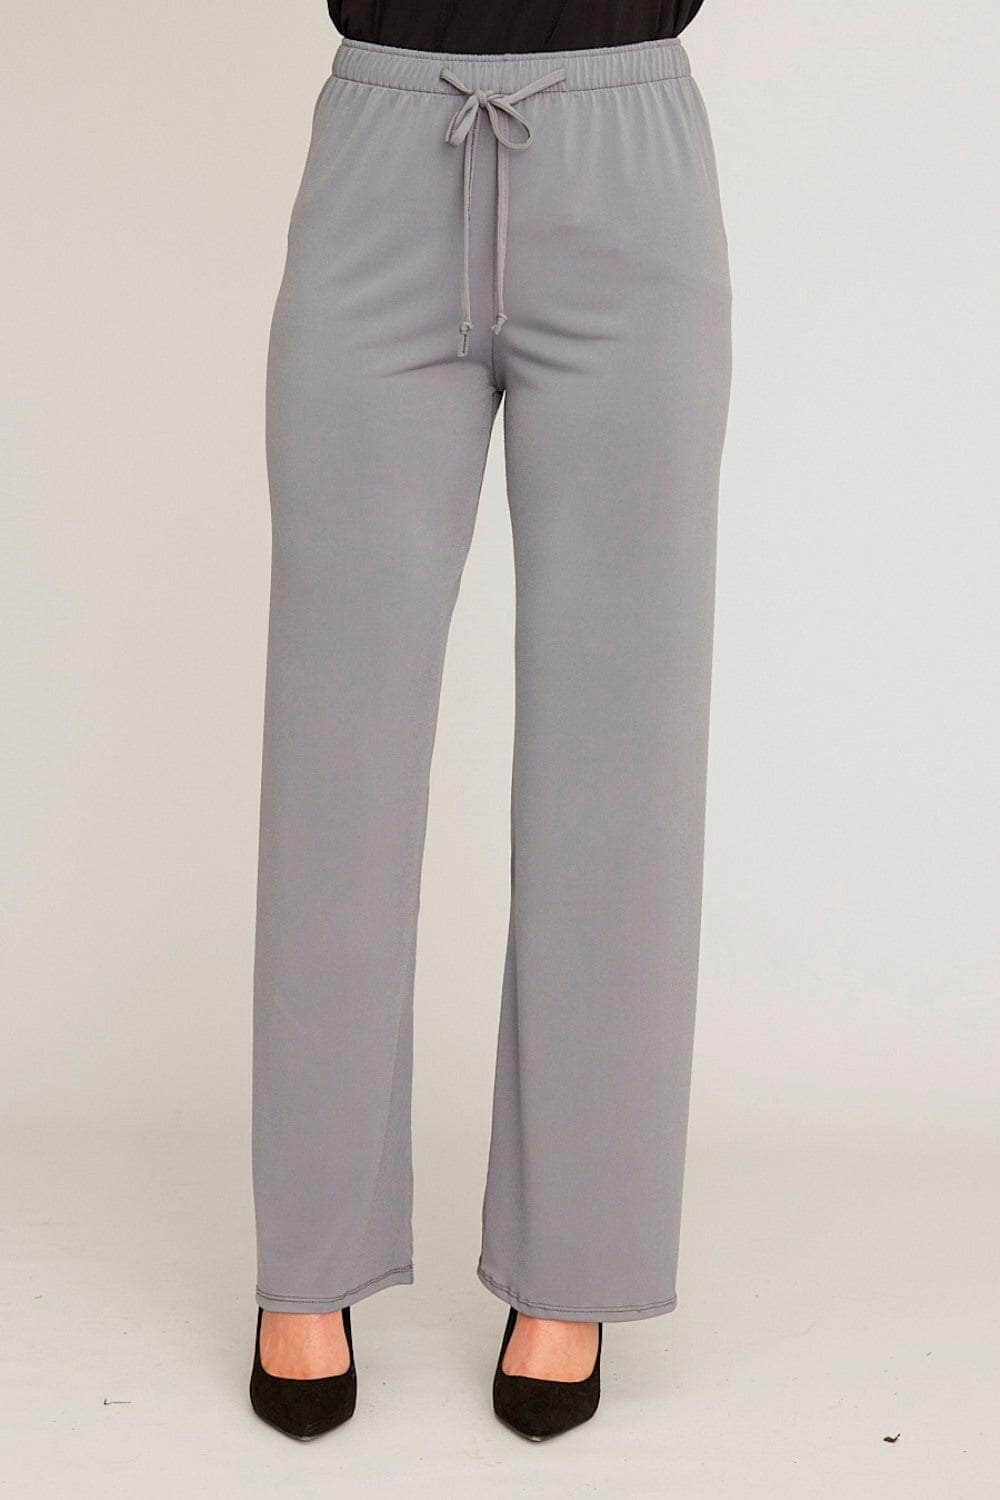 E2/L2 Trousers Grey / UK: 12 - EU: 38 - US: S Saloos Essential Mocktie Trousers